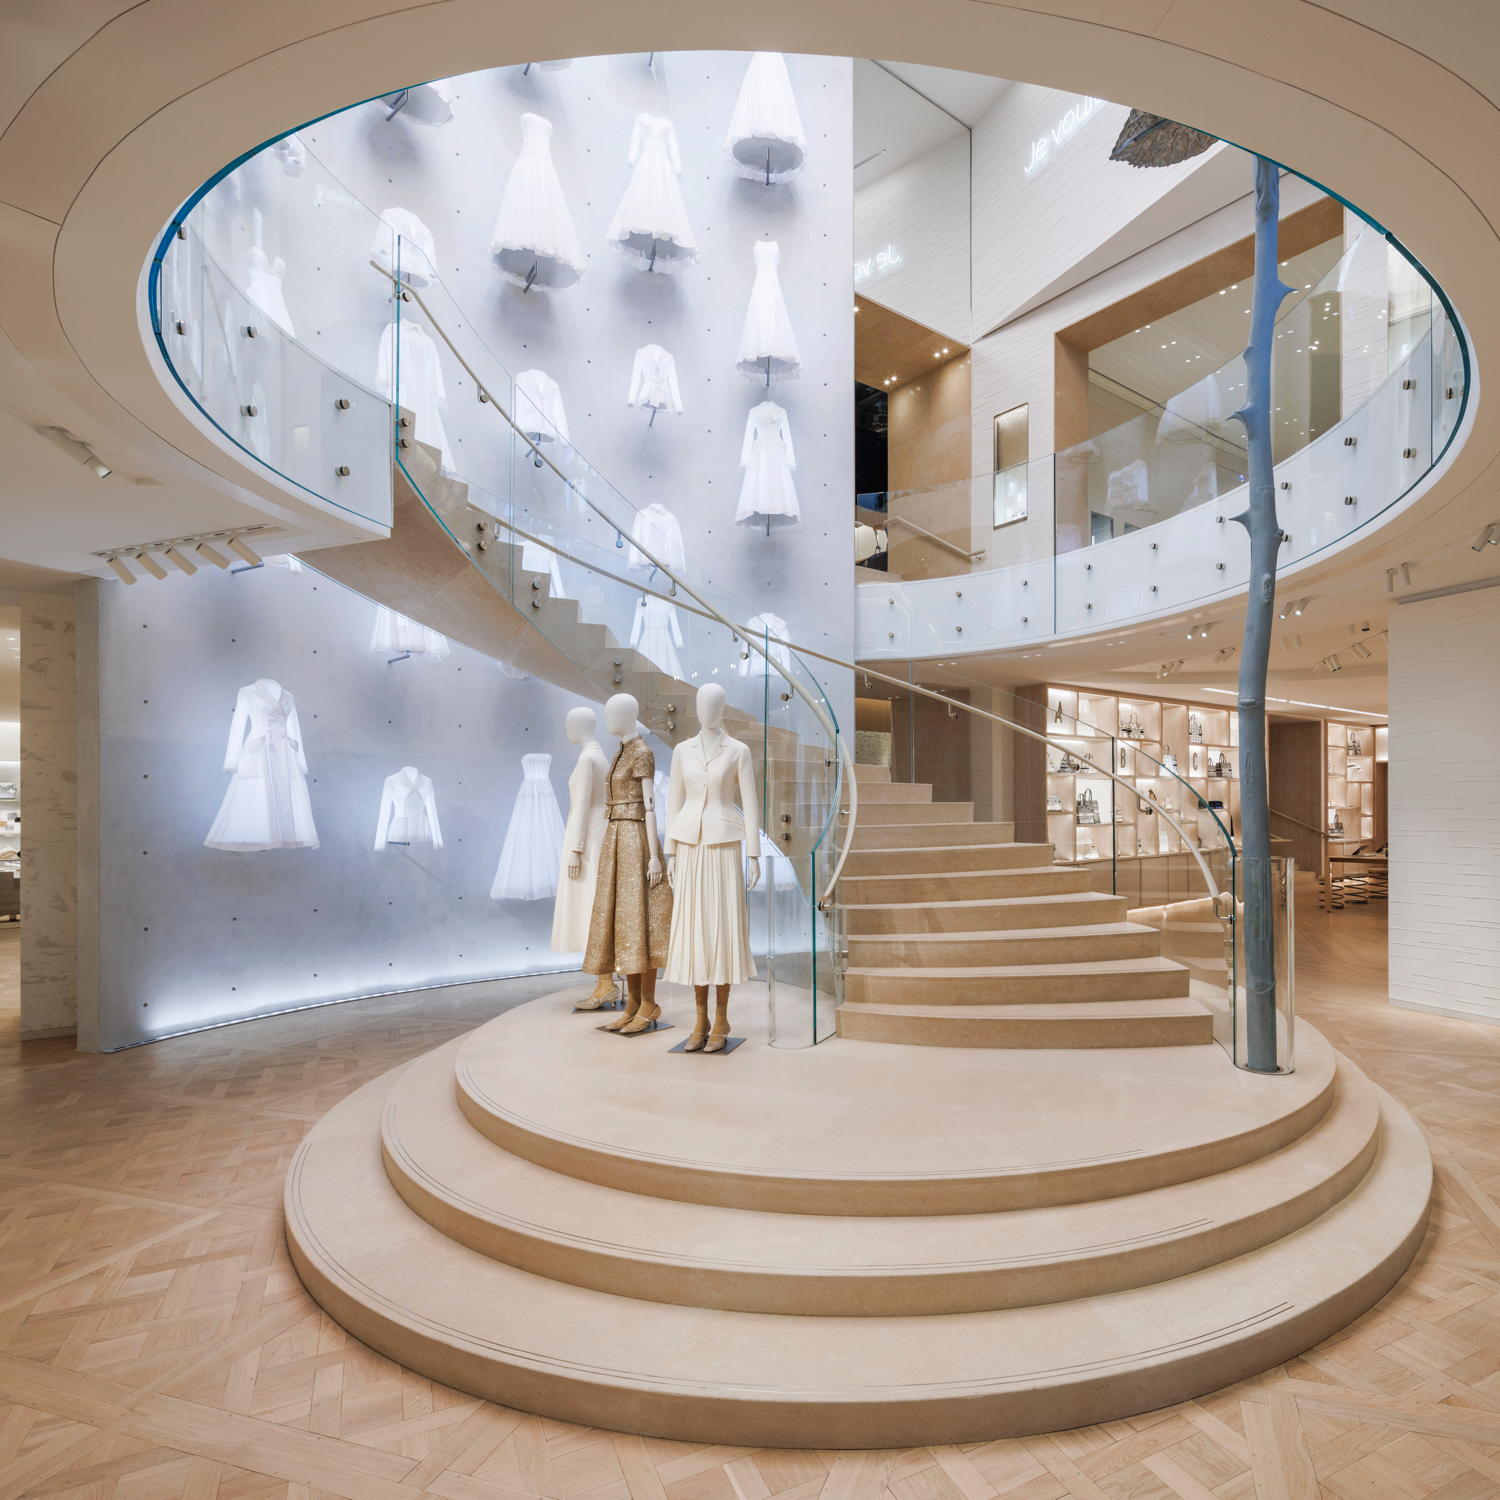 Dior flagship store by Peter Marino, Tokyo – Japan